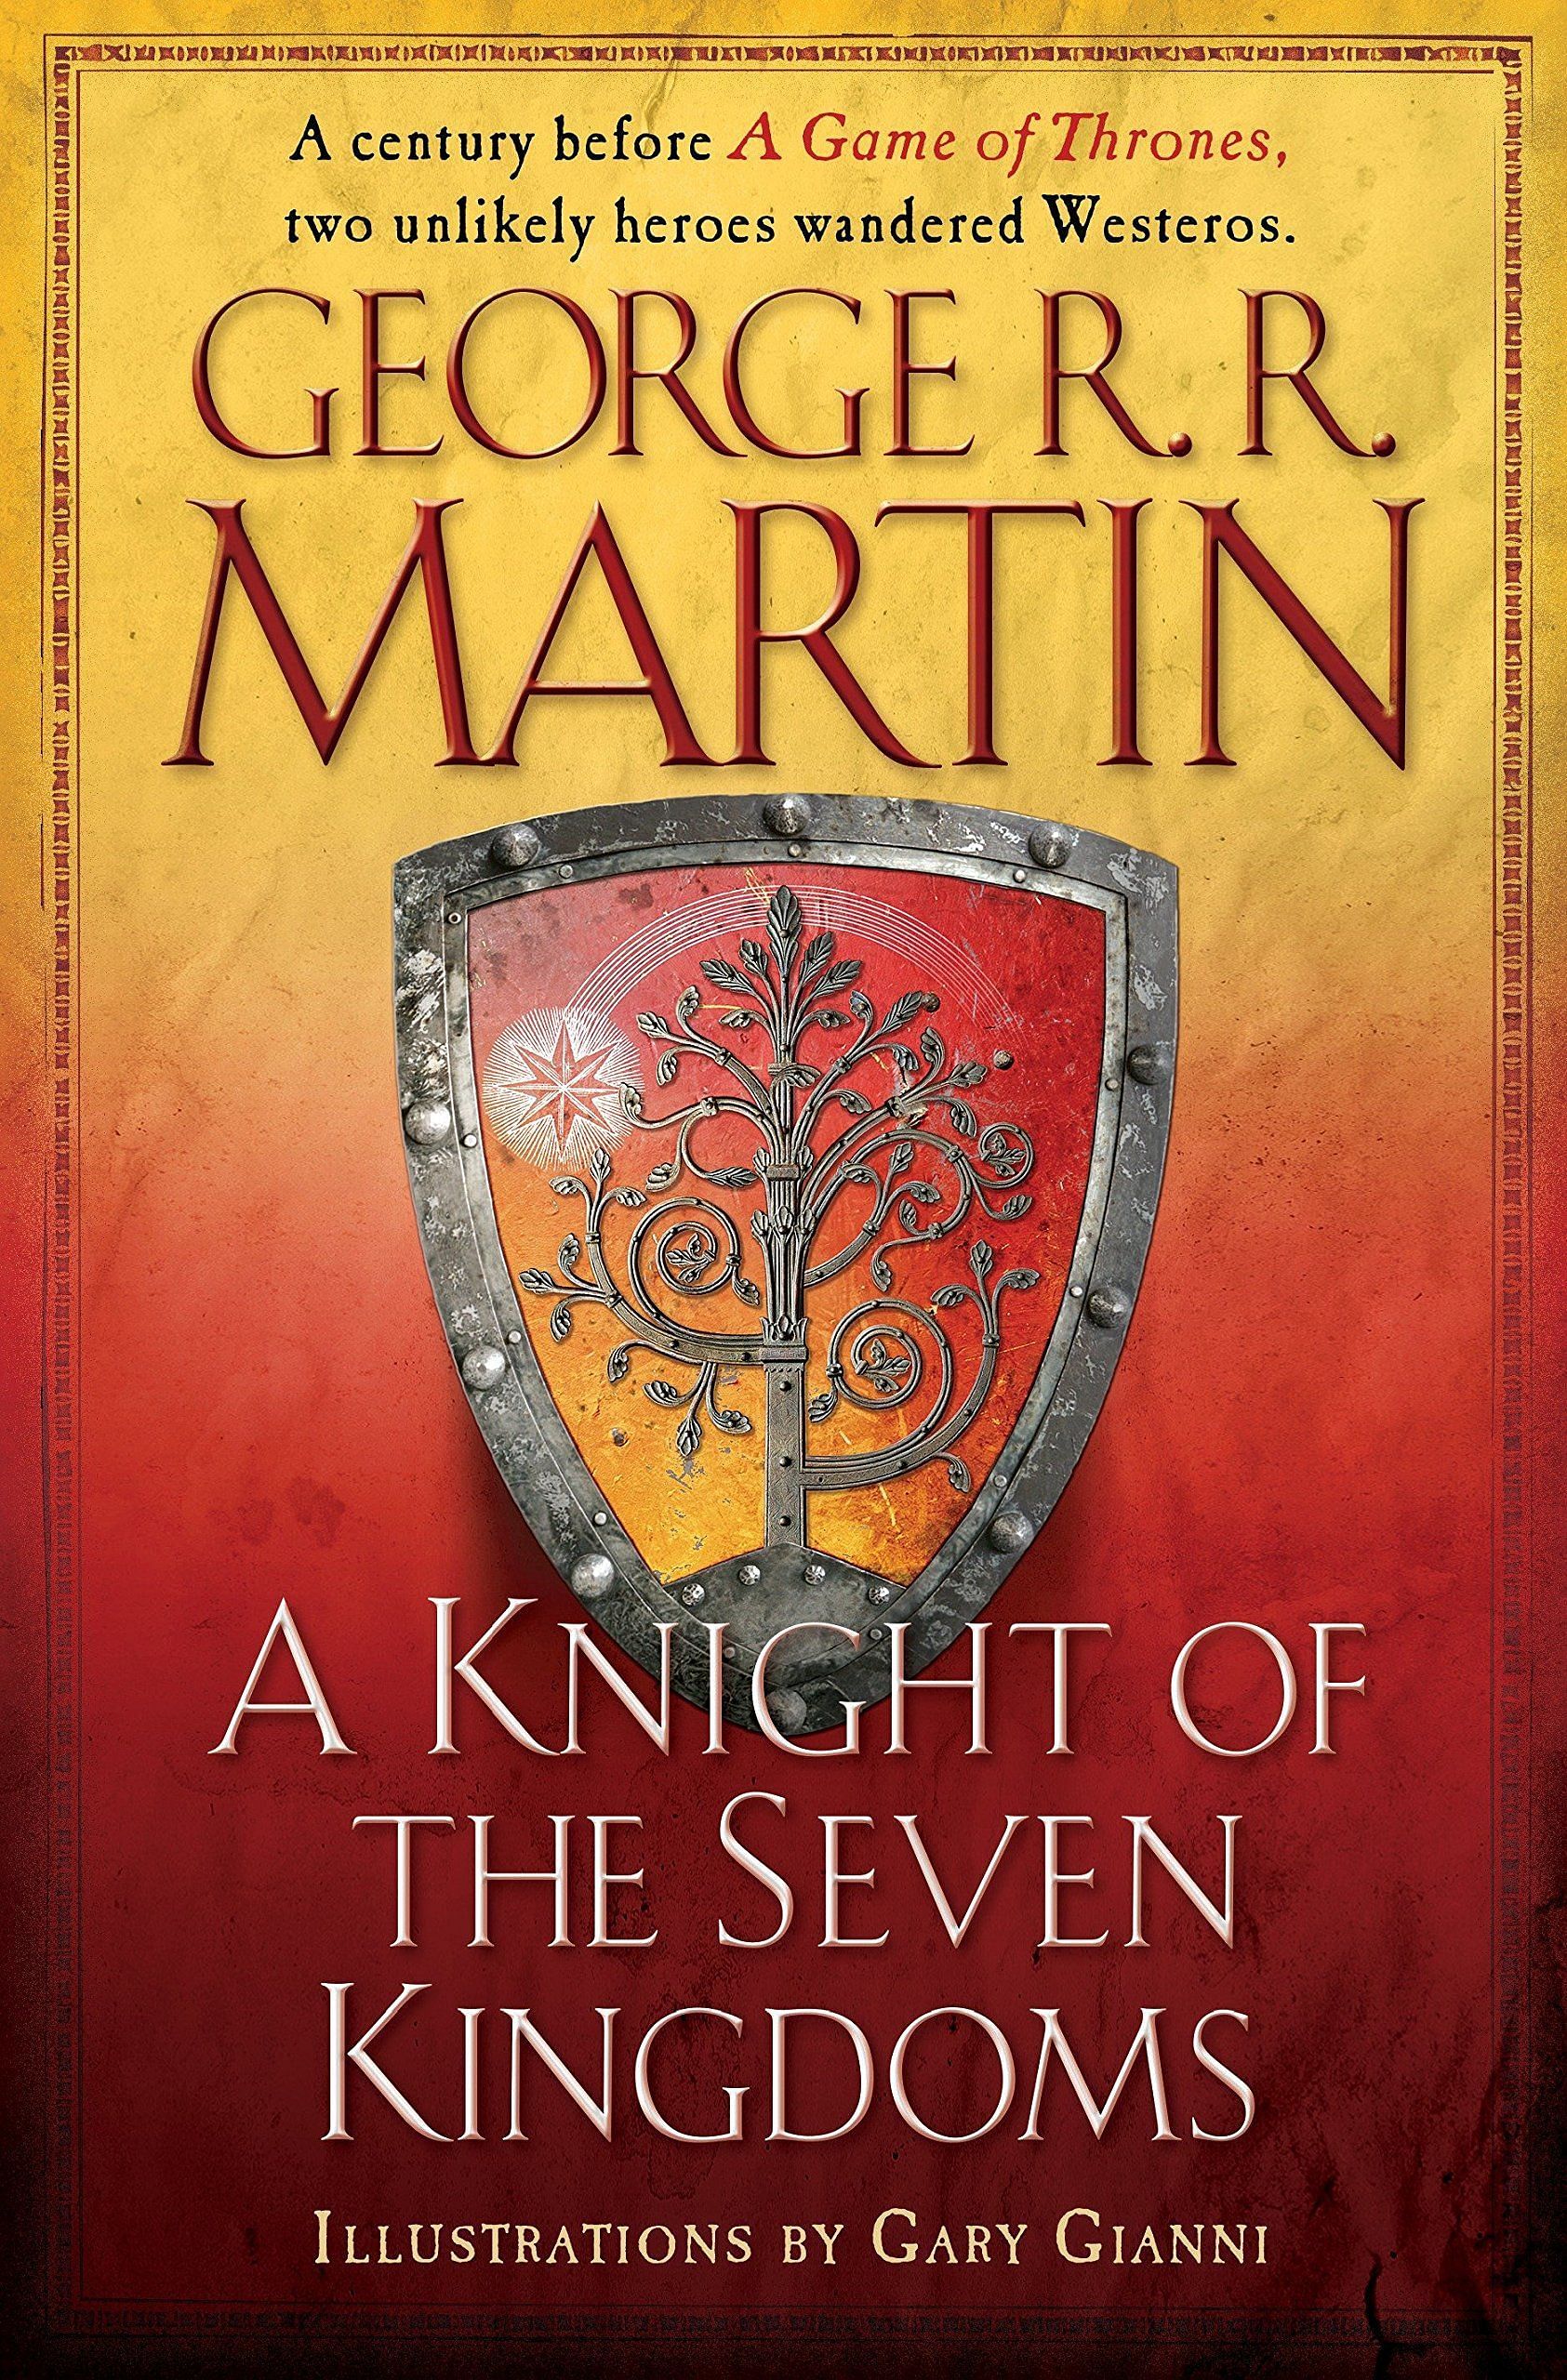 A Knight of the Seven Kingdoms (Image via. Amazon)